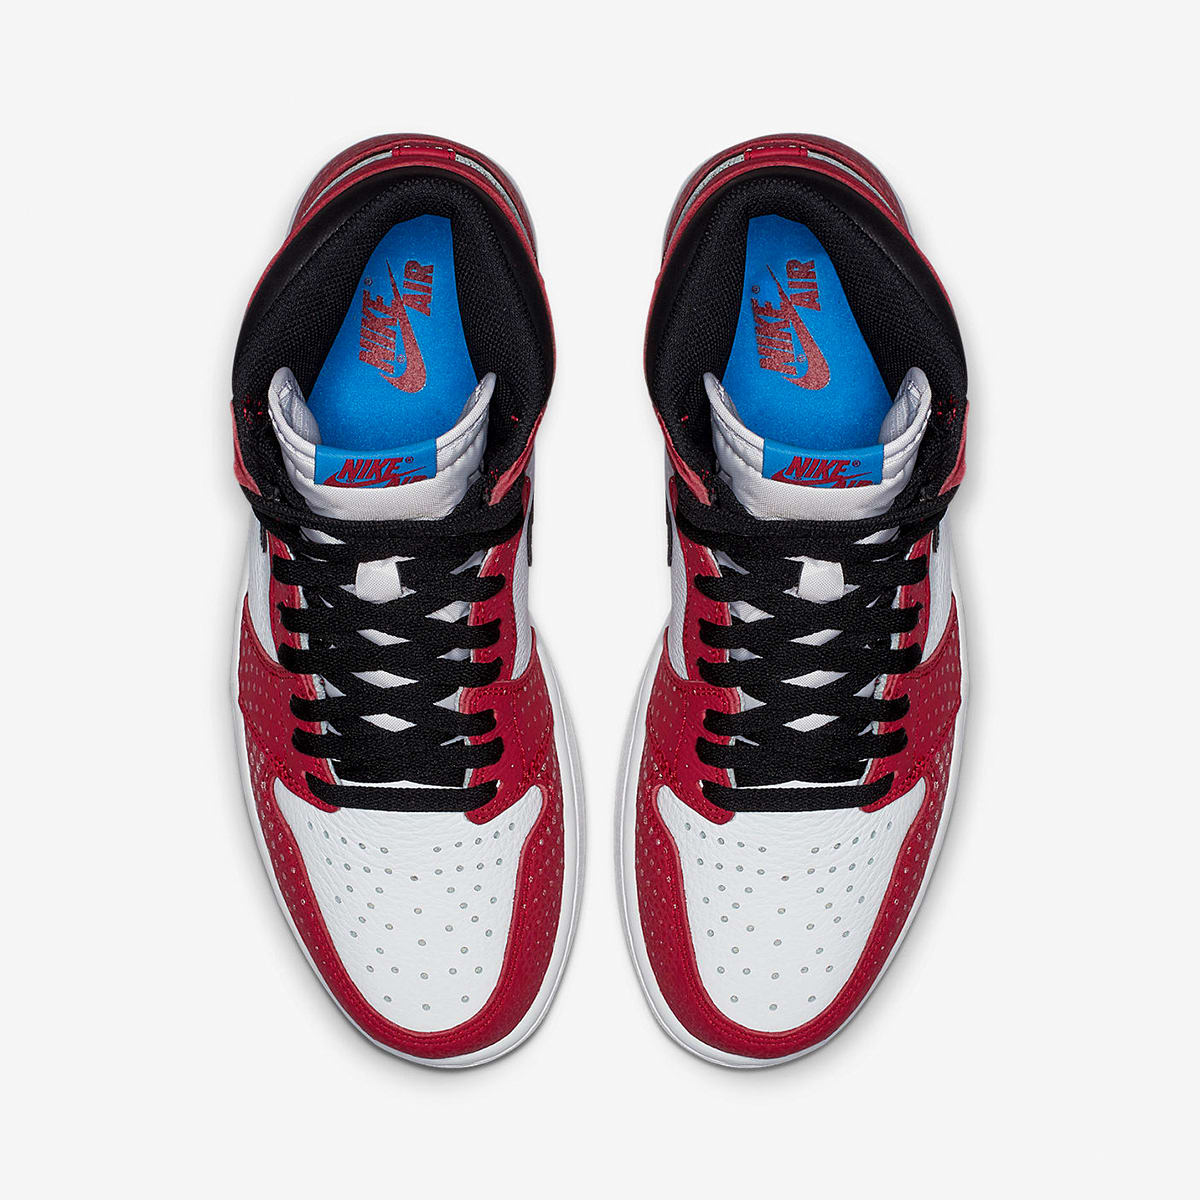 Nike Air Jordan 1 Retro High OG (Gym Red, Black & White) | END. Launches